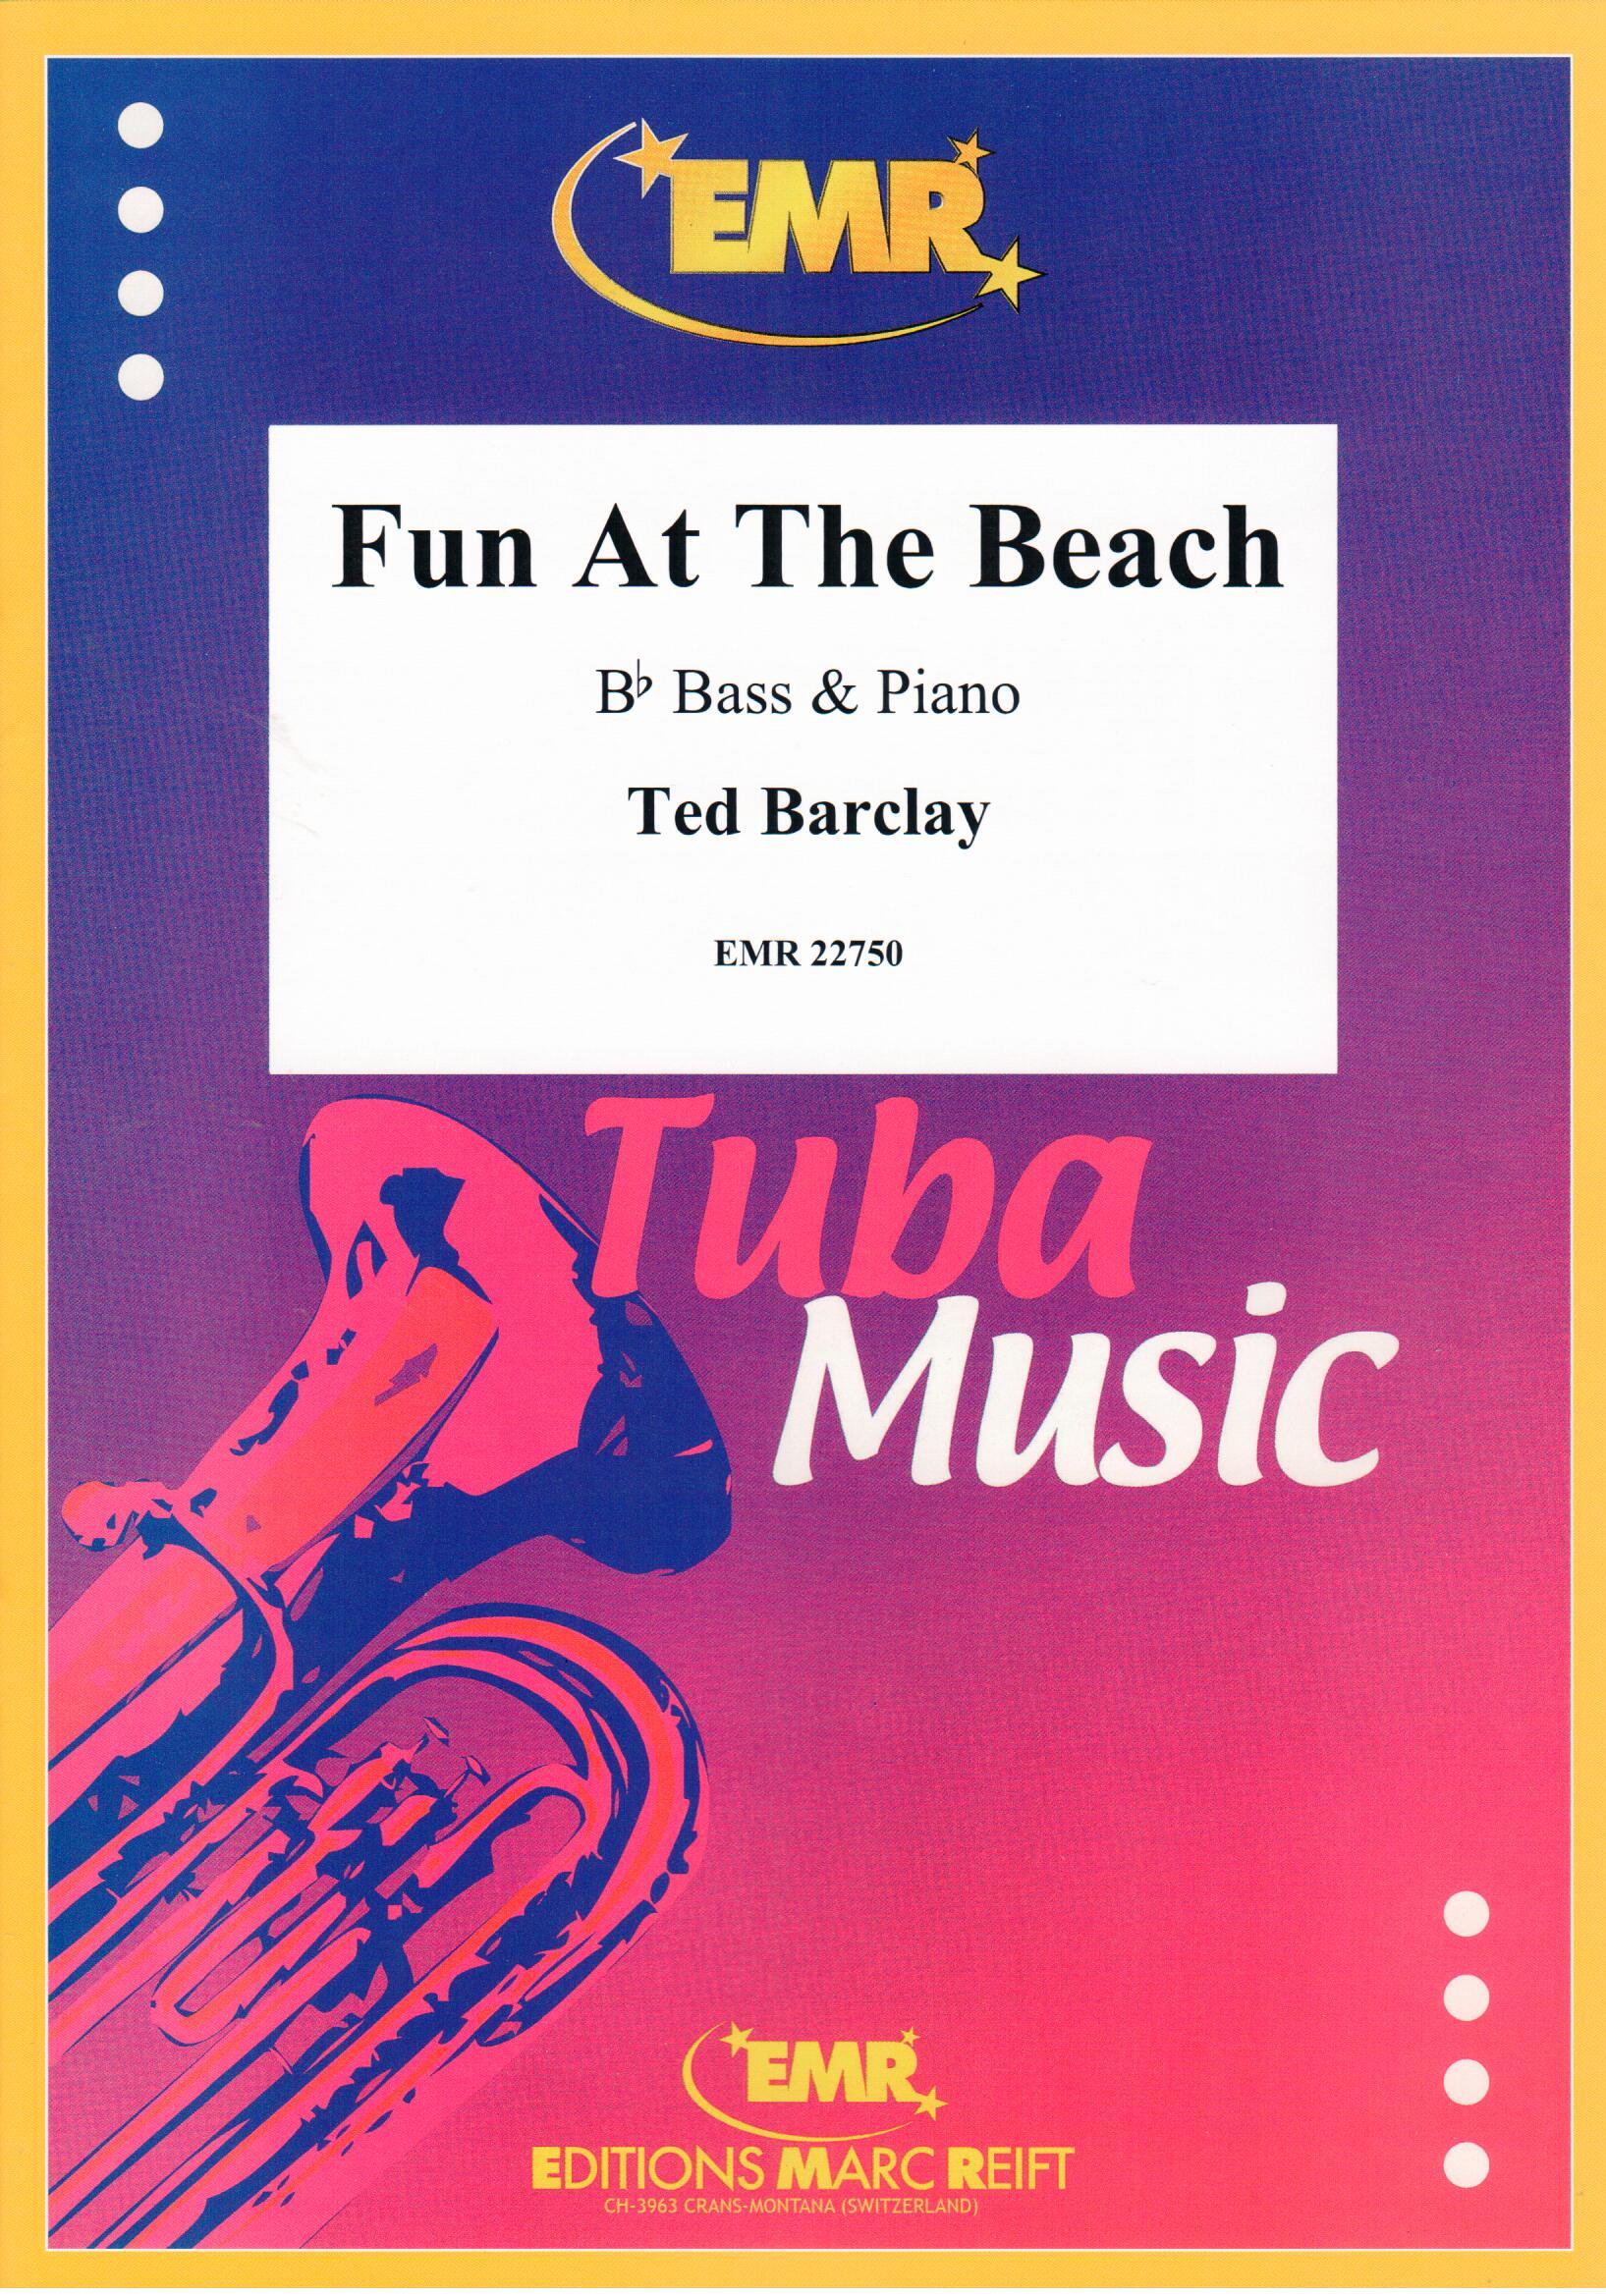 FUN AT THE BEACH, SOLOS - E♭. Bass